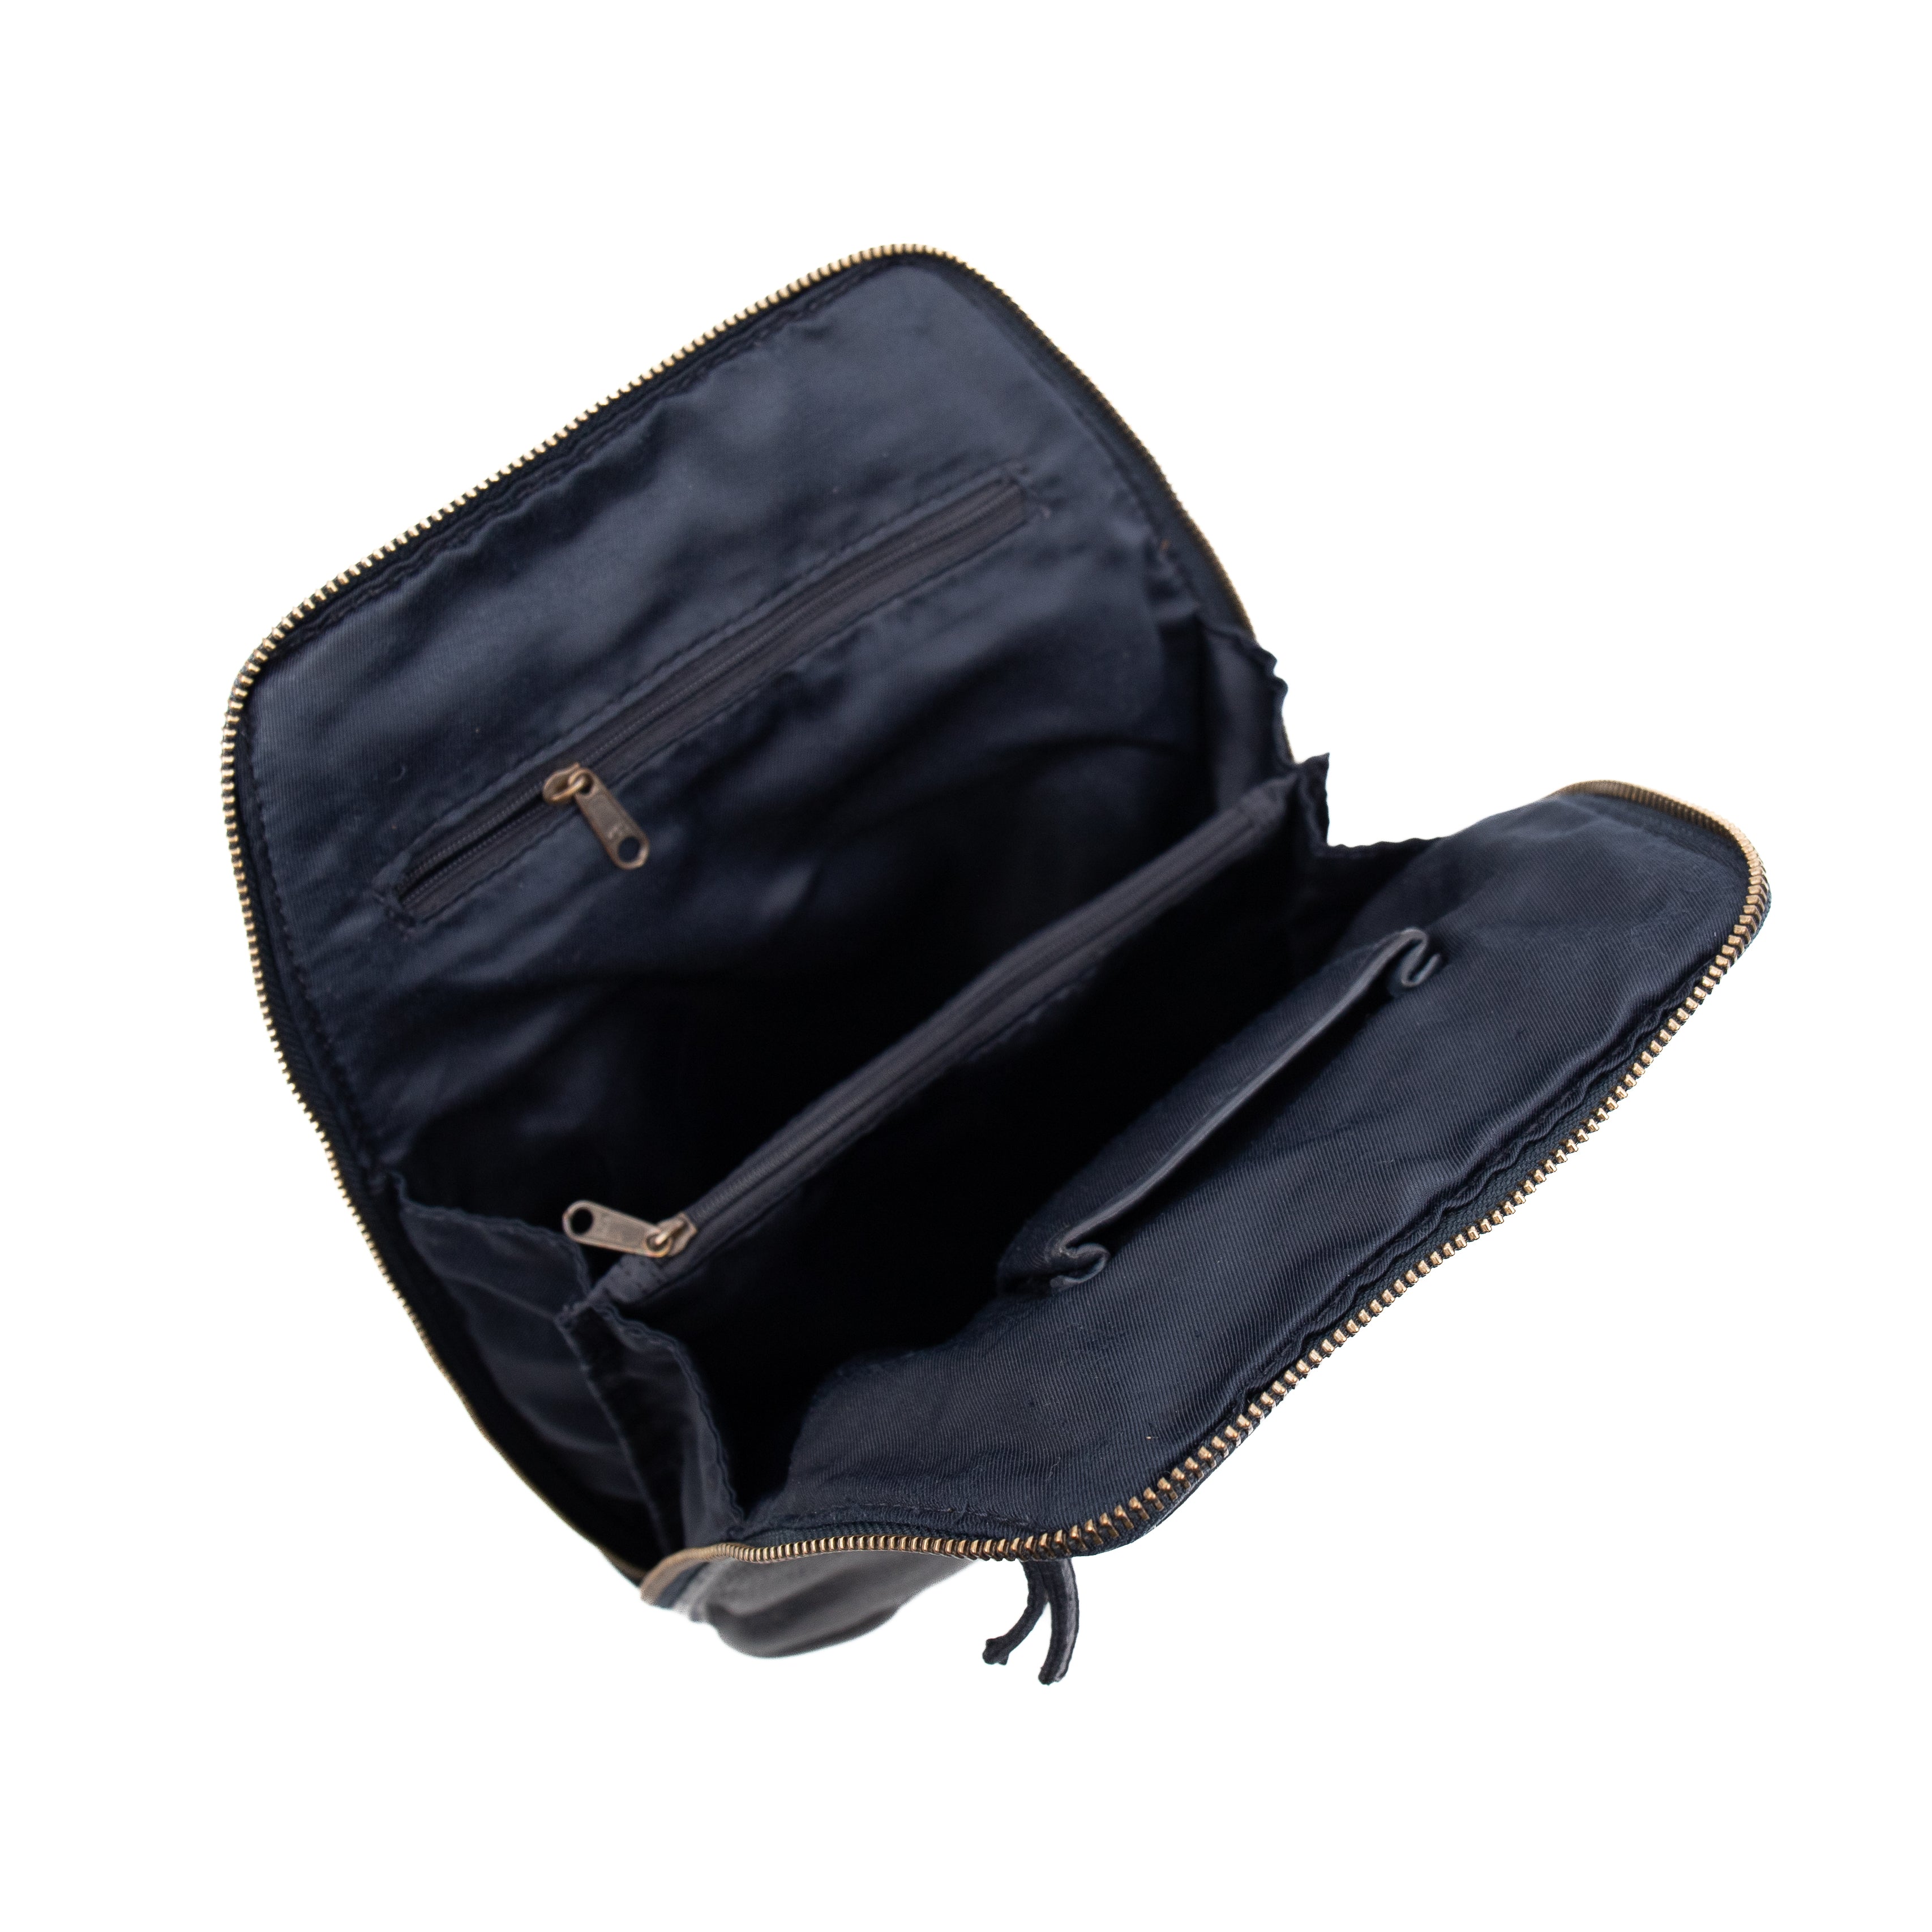 Backpack 'Iris' dark blue - CL 32852